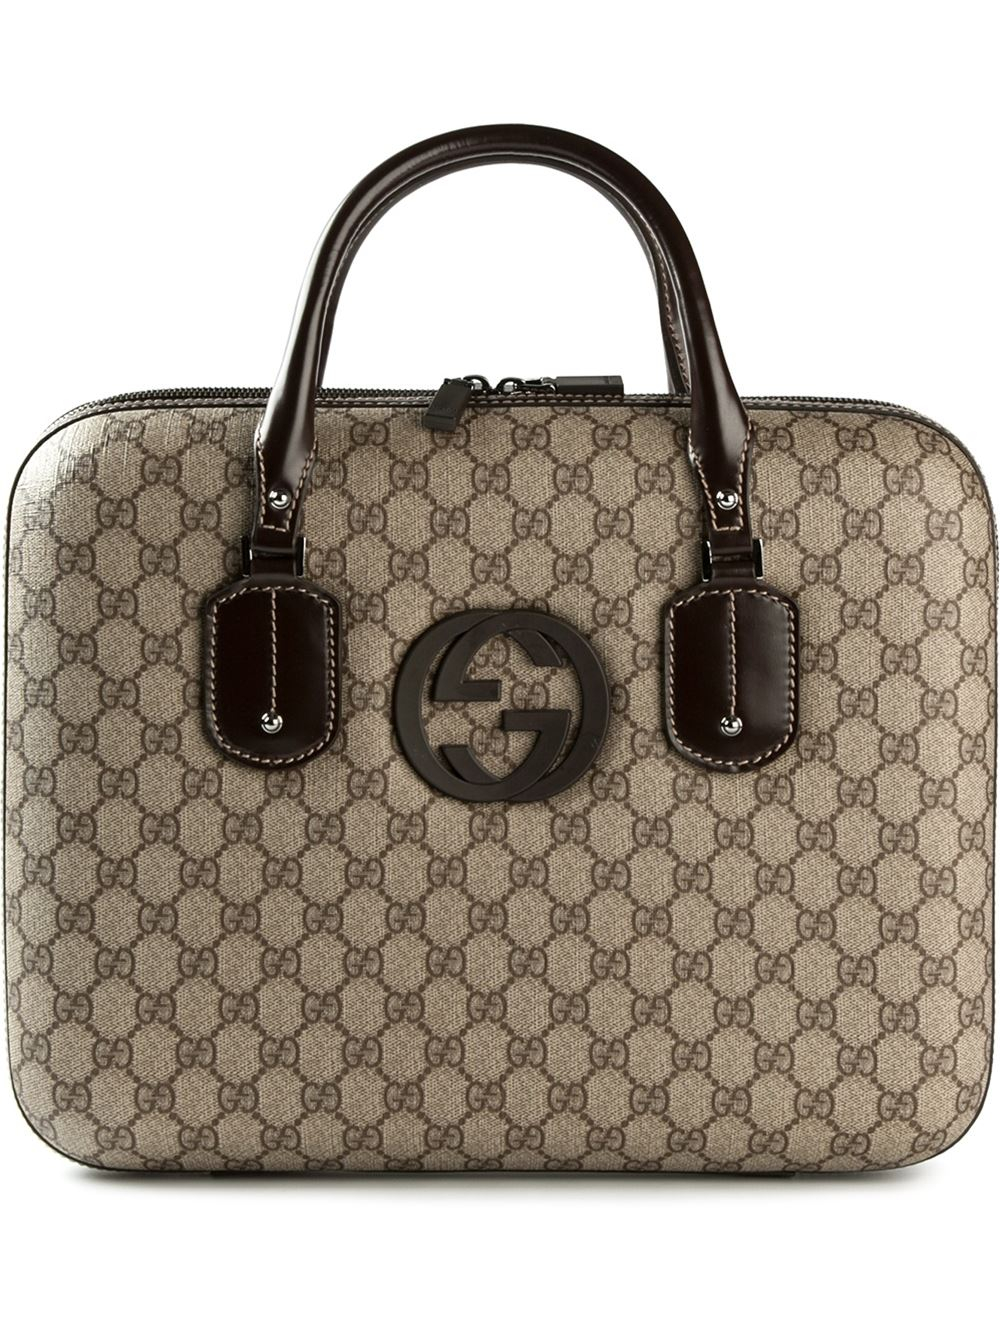 Lyst - Gucci Signature Monogram Laptop Bag in Natural